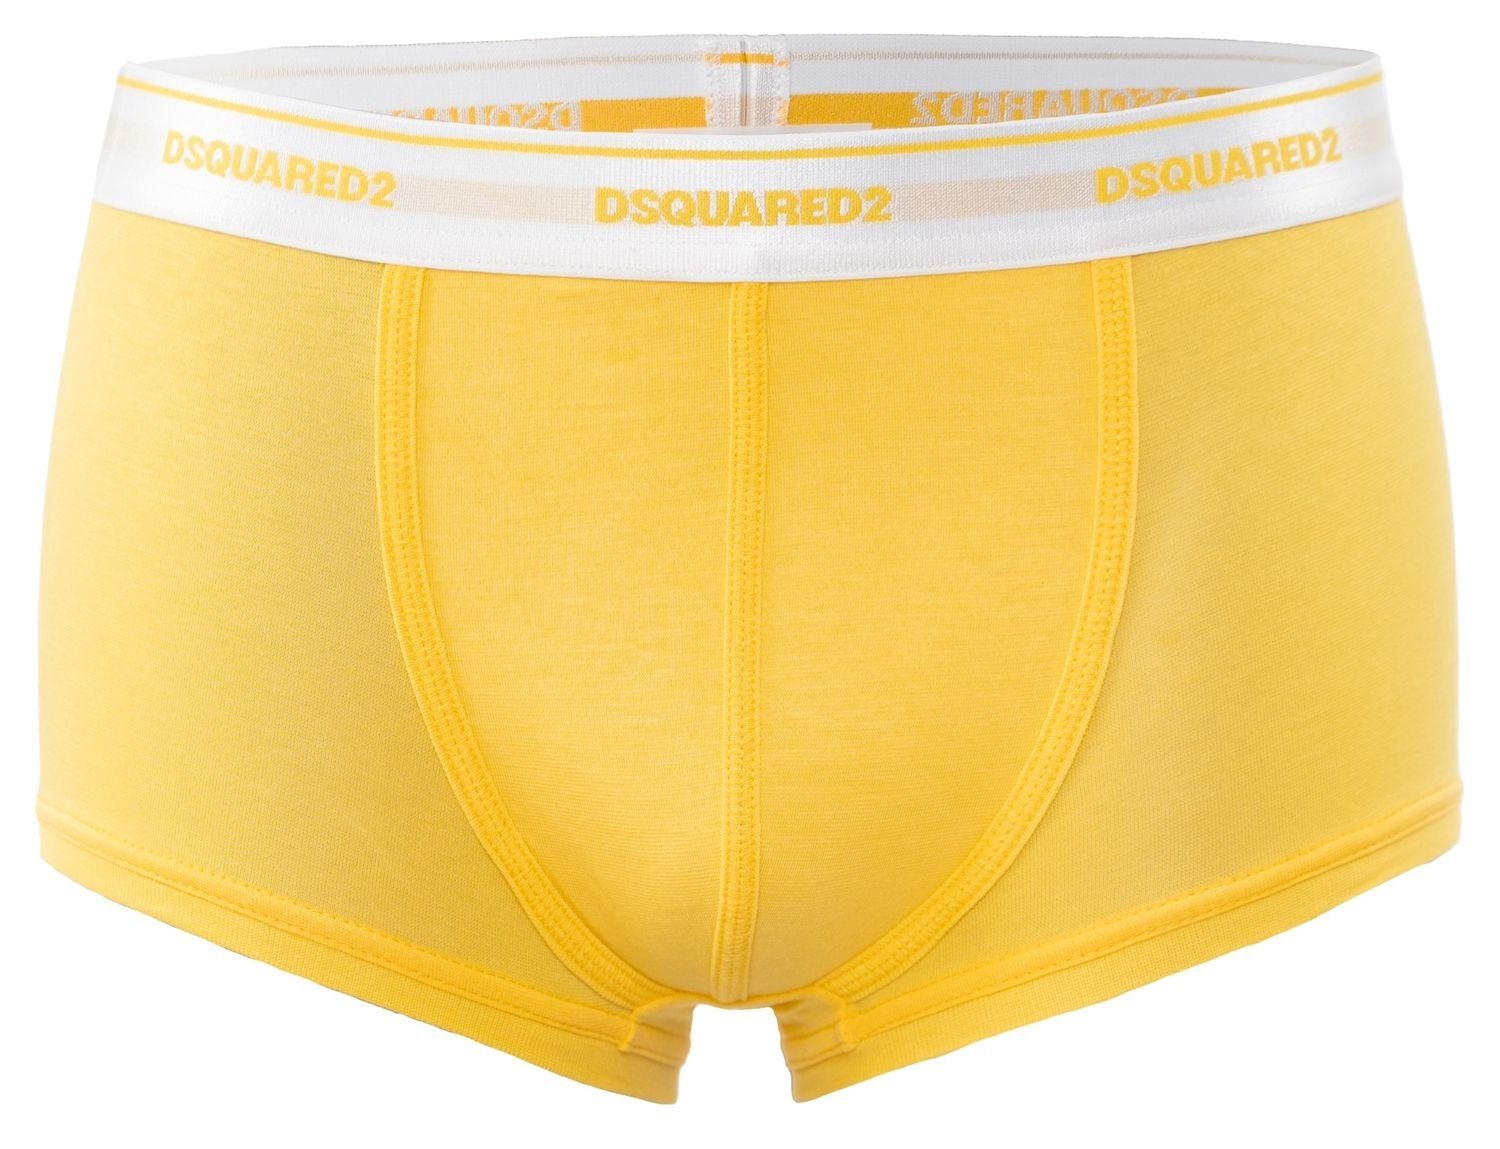 Dsquared2 Trunk Dsquared2 Boxershorts / Pants / Shorts / Boxer in gelb Größe S / M / L / XL / XXL (1-St)